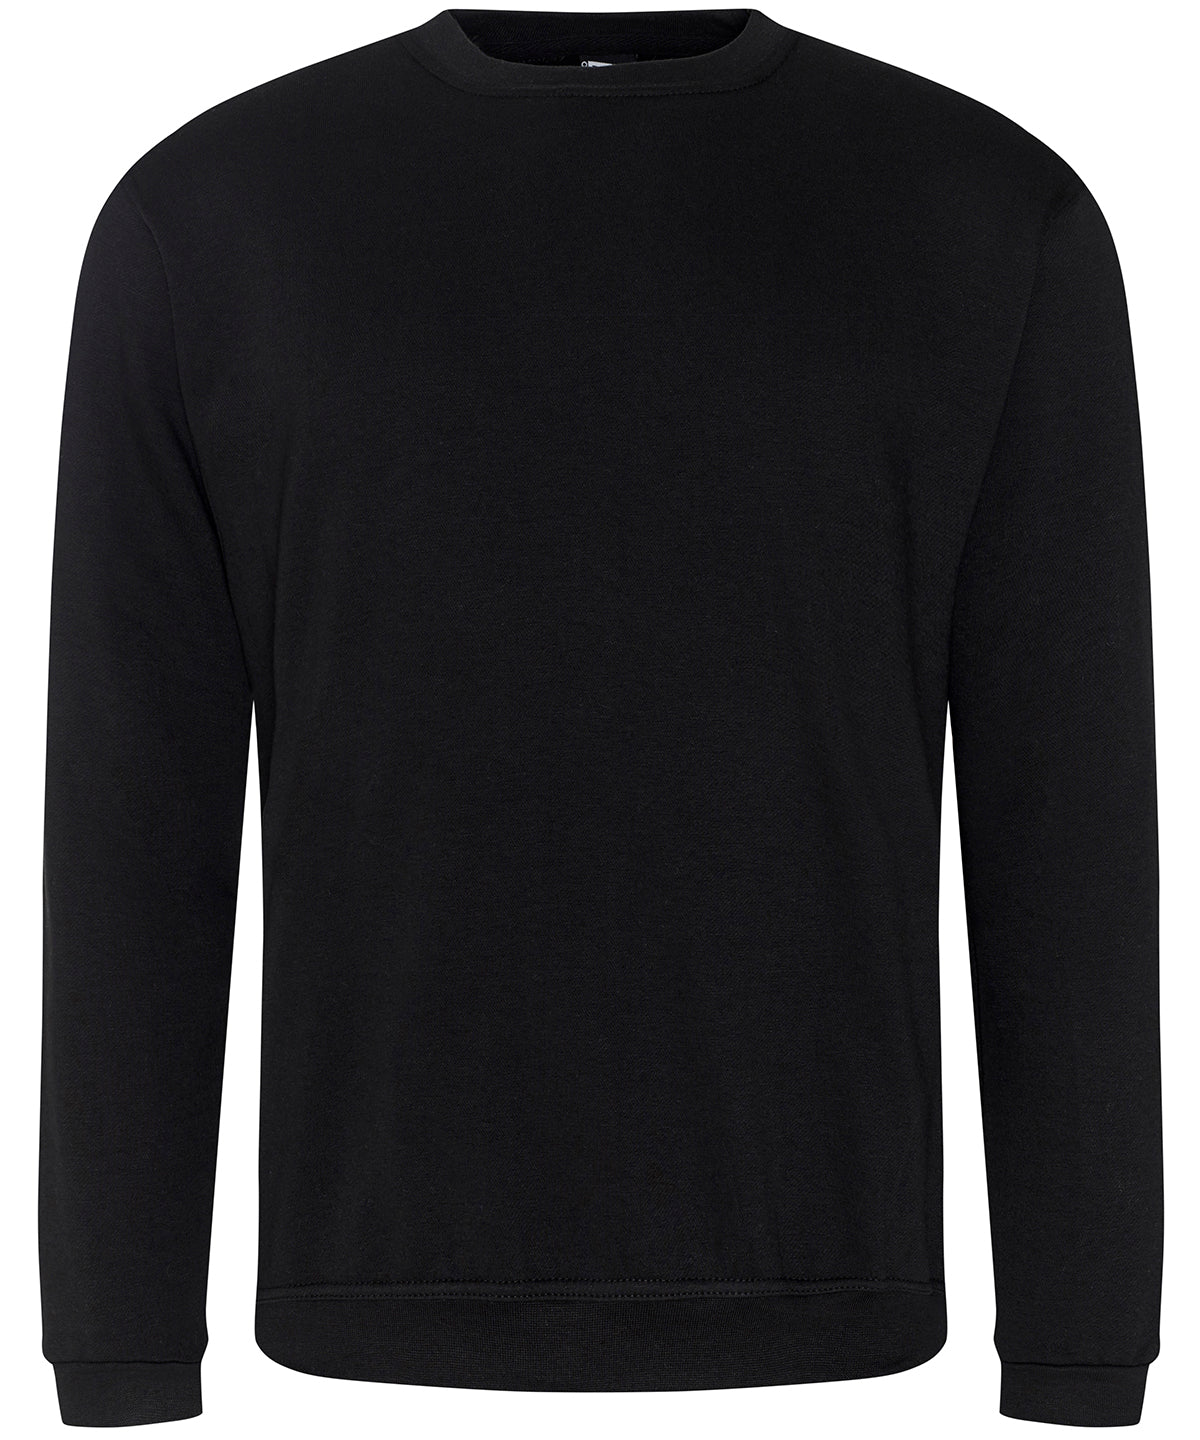 ProRTX Pro sweatshirt Black